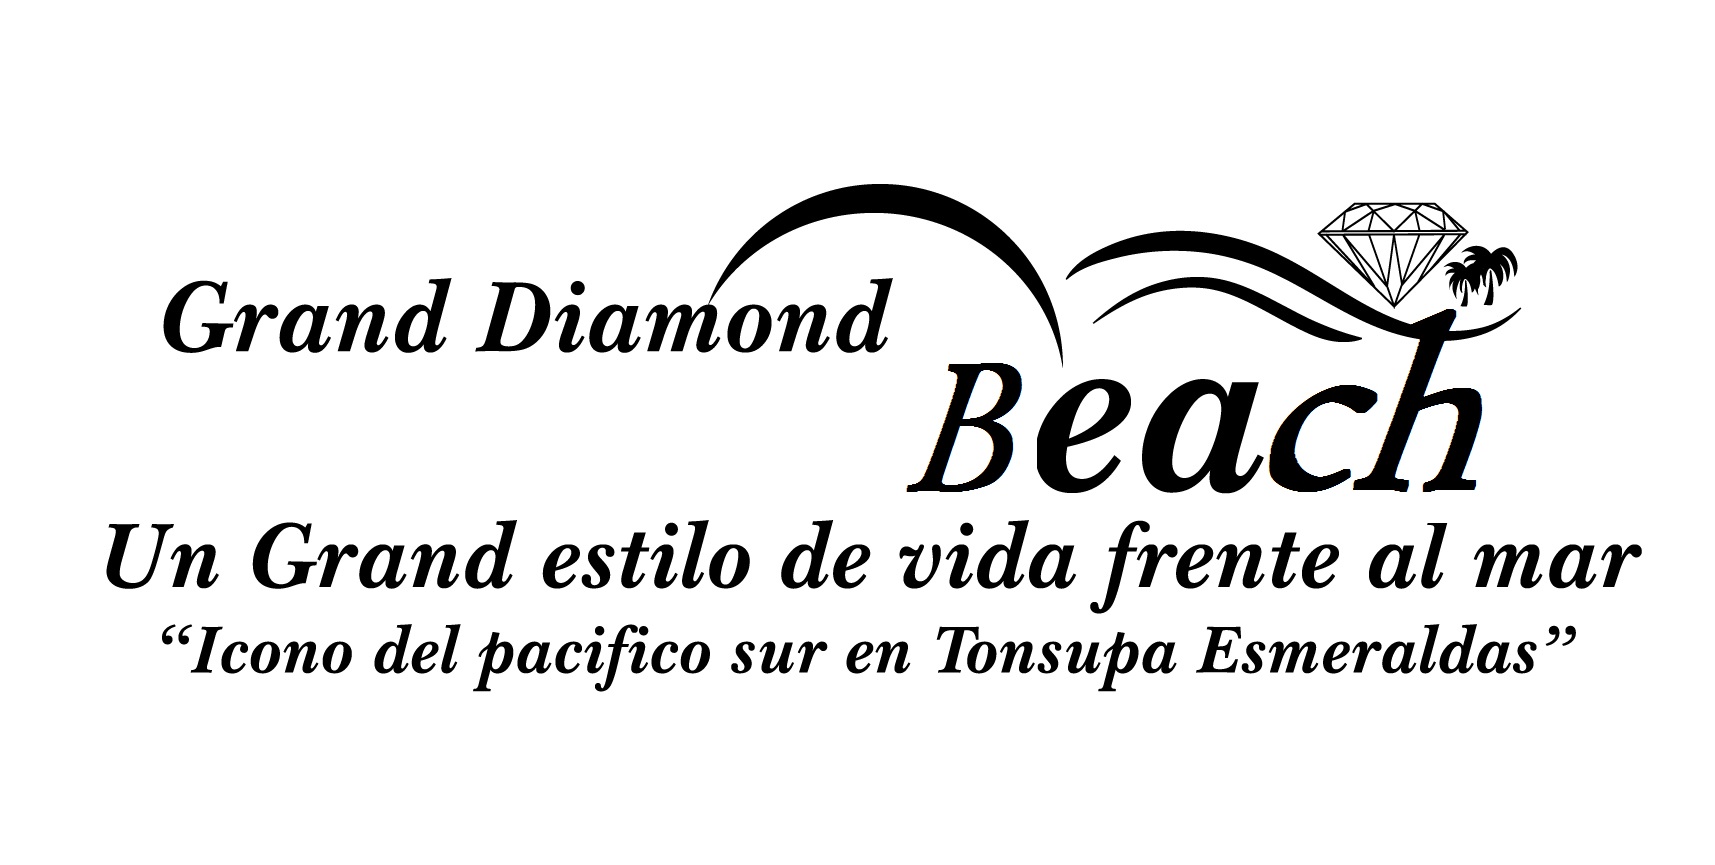 Grand Diamond Beach